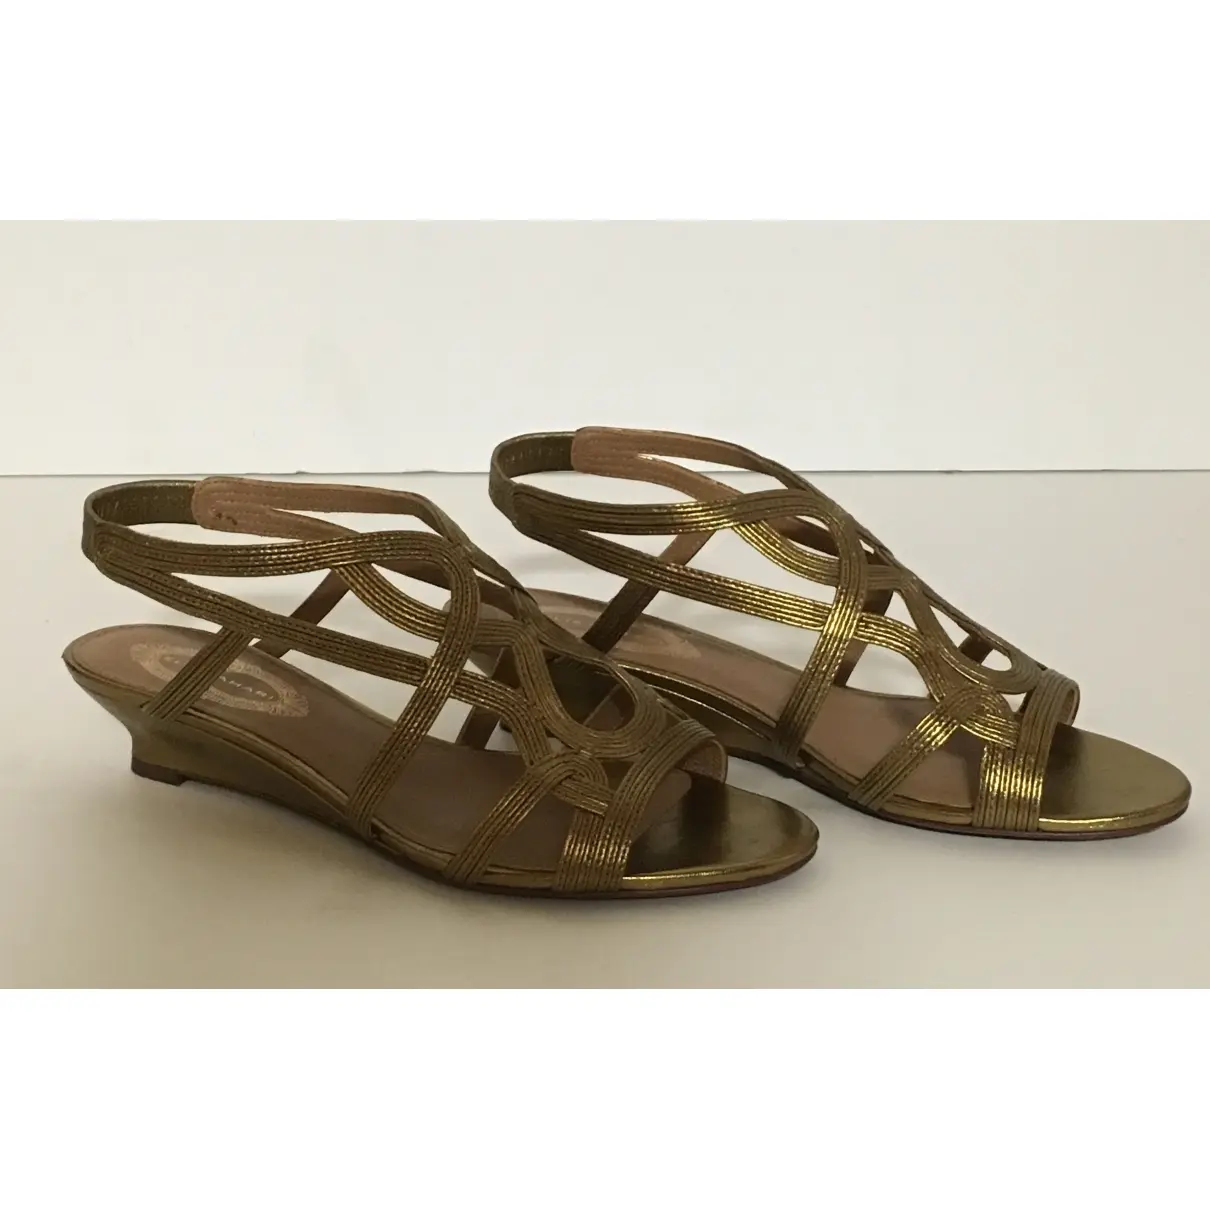 Elie Tahari Leather sandals for sale